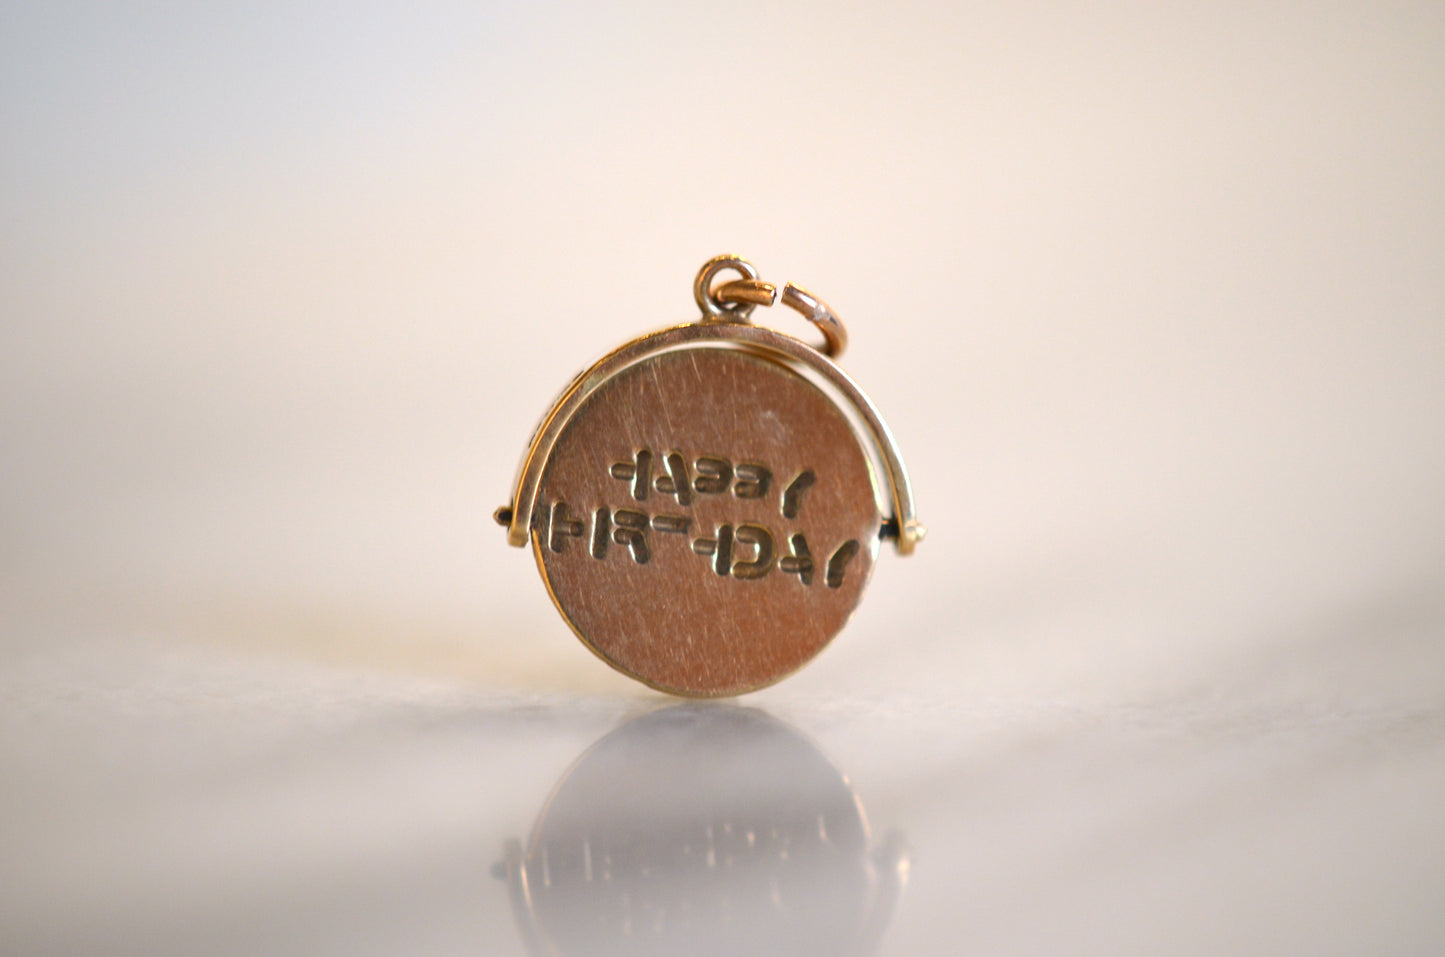 Vintage Gold "Happy Birthday" Spinner Charm